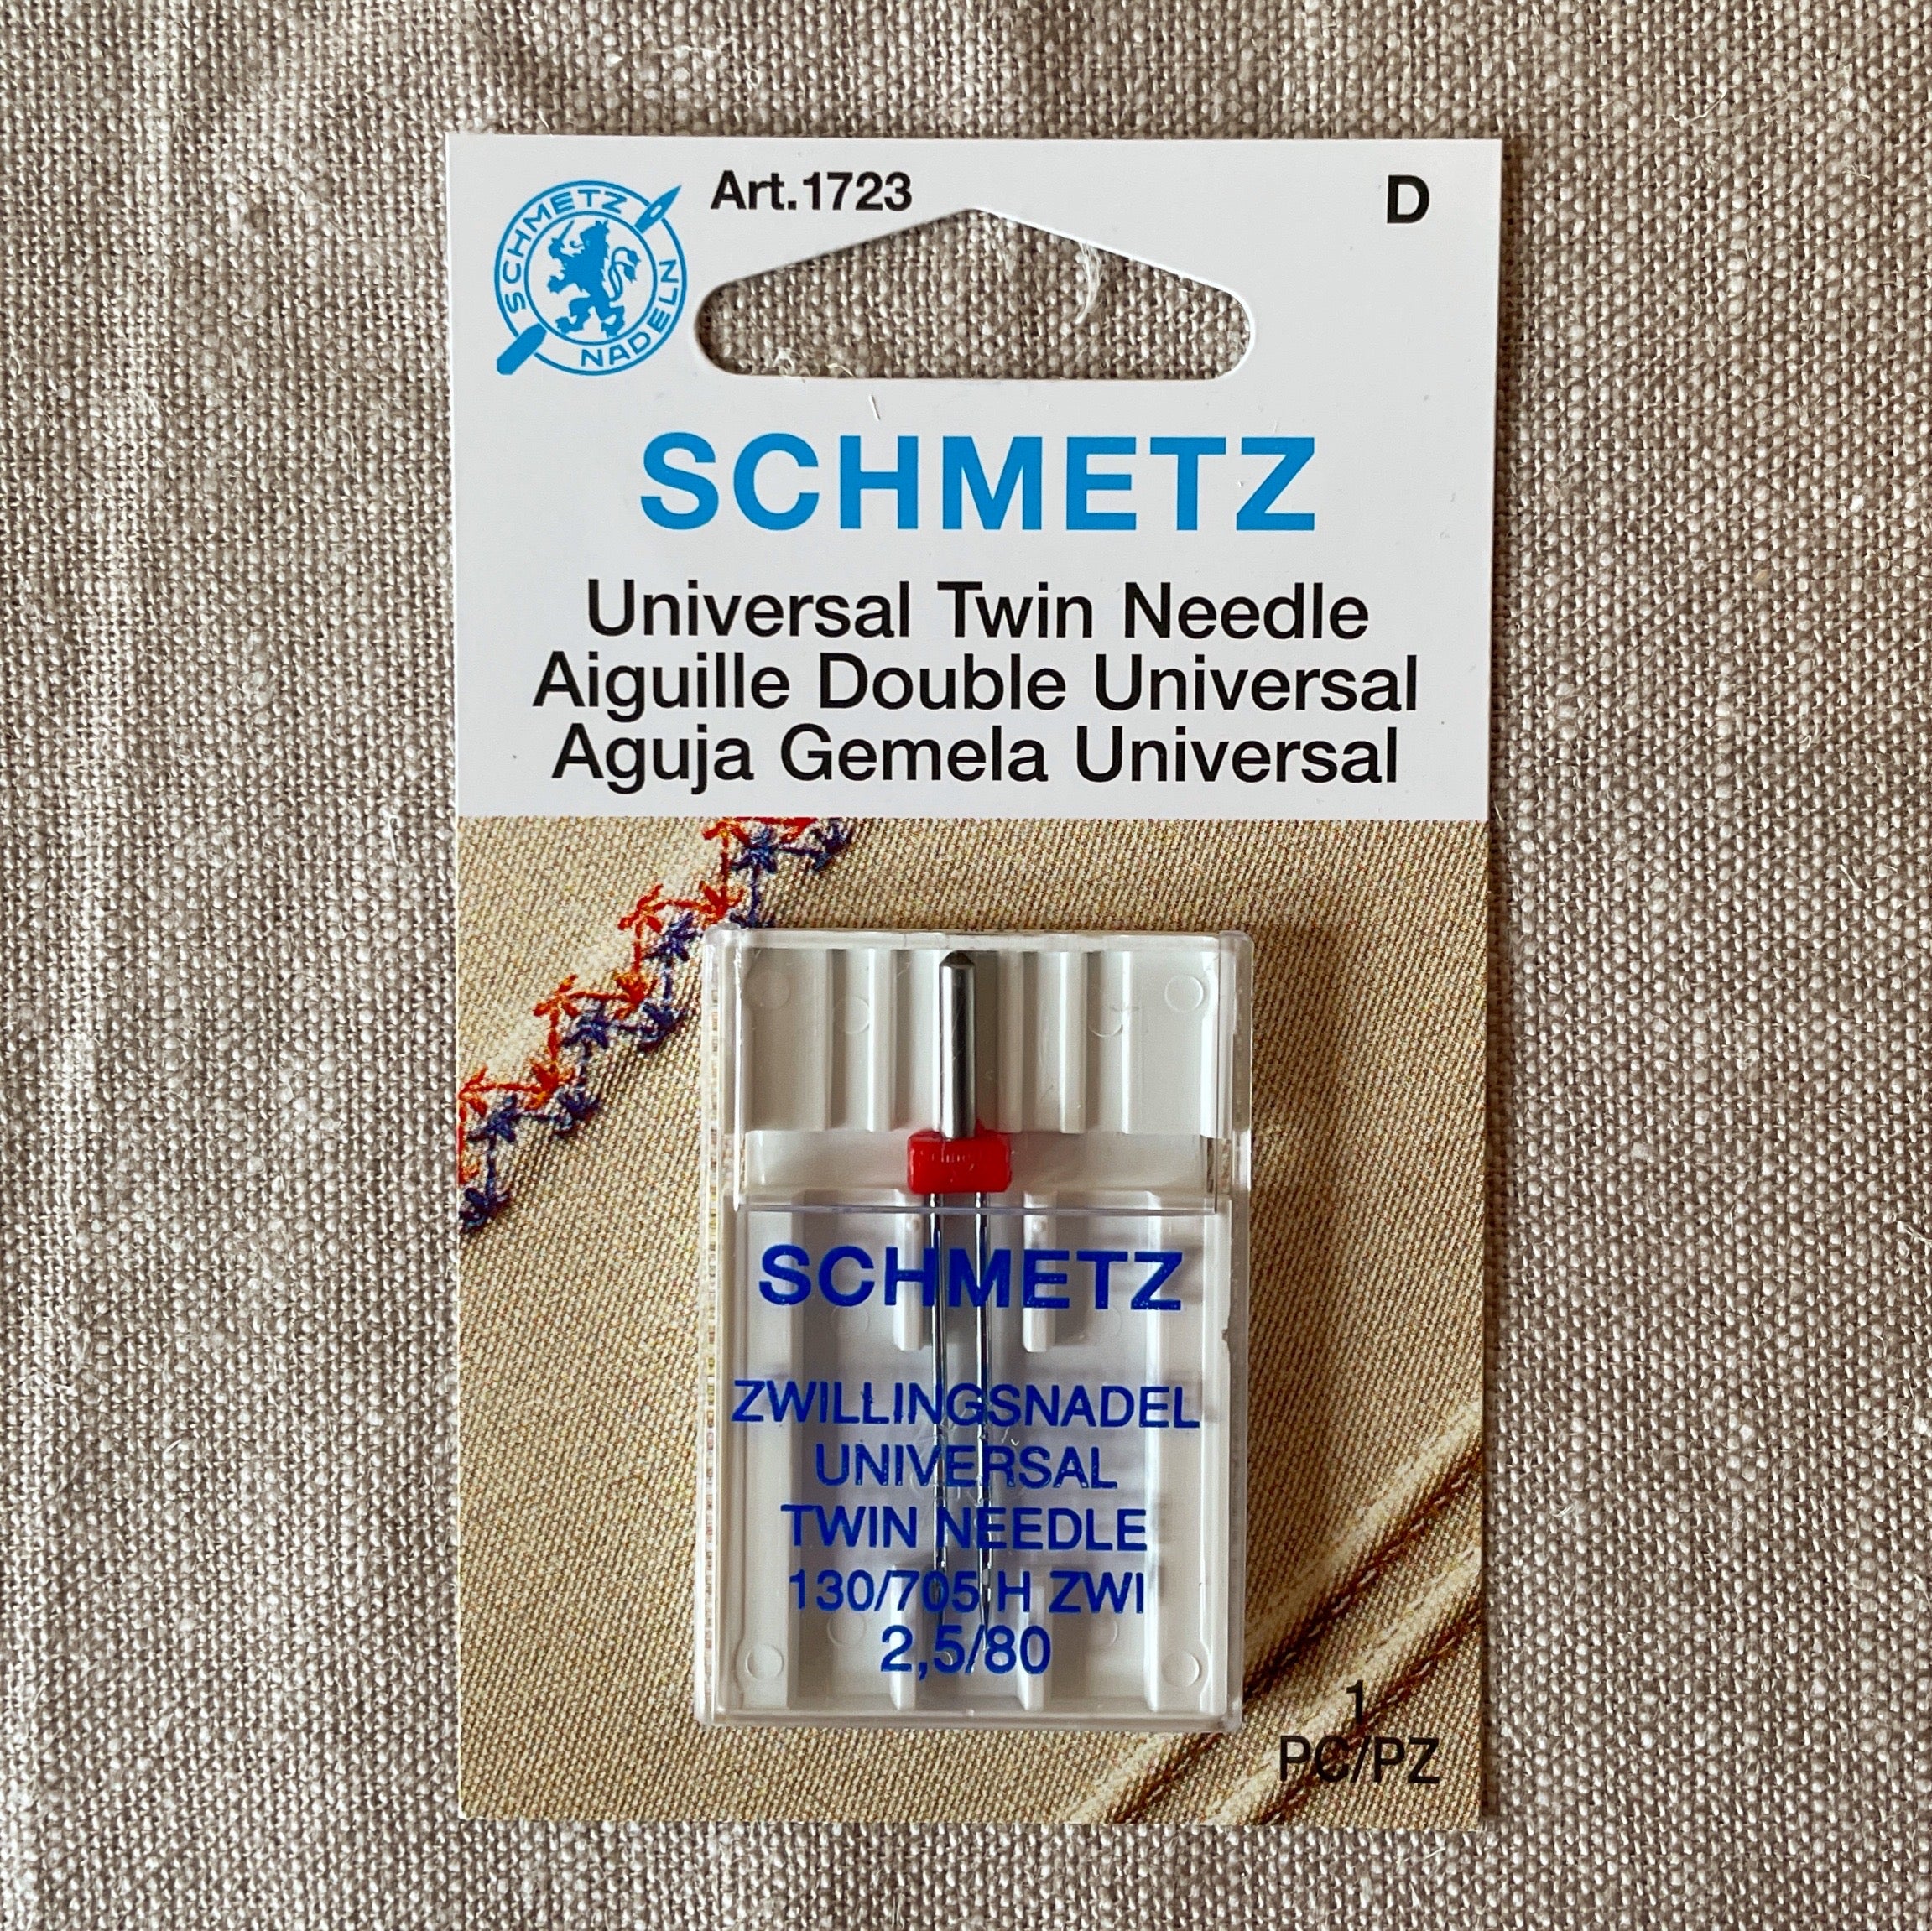 Universal Machine Needles Size 12/80, 5 pc Schmetz